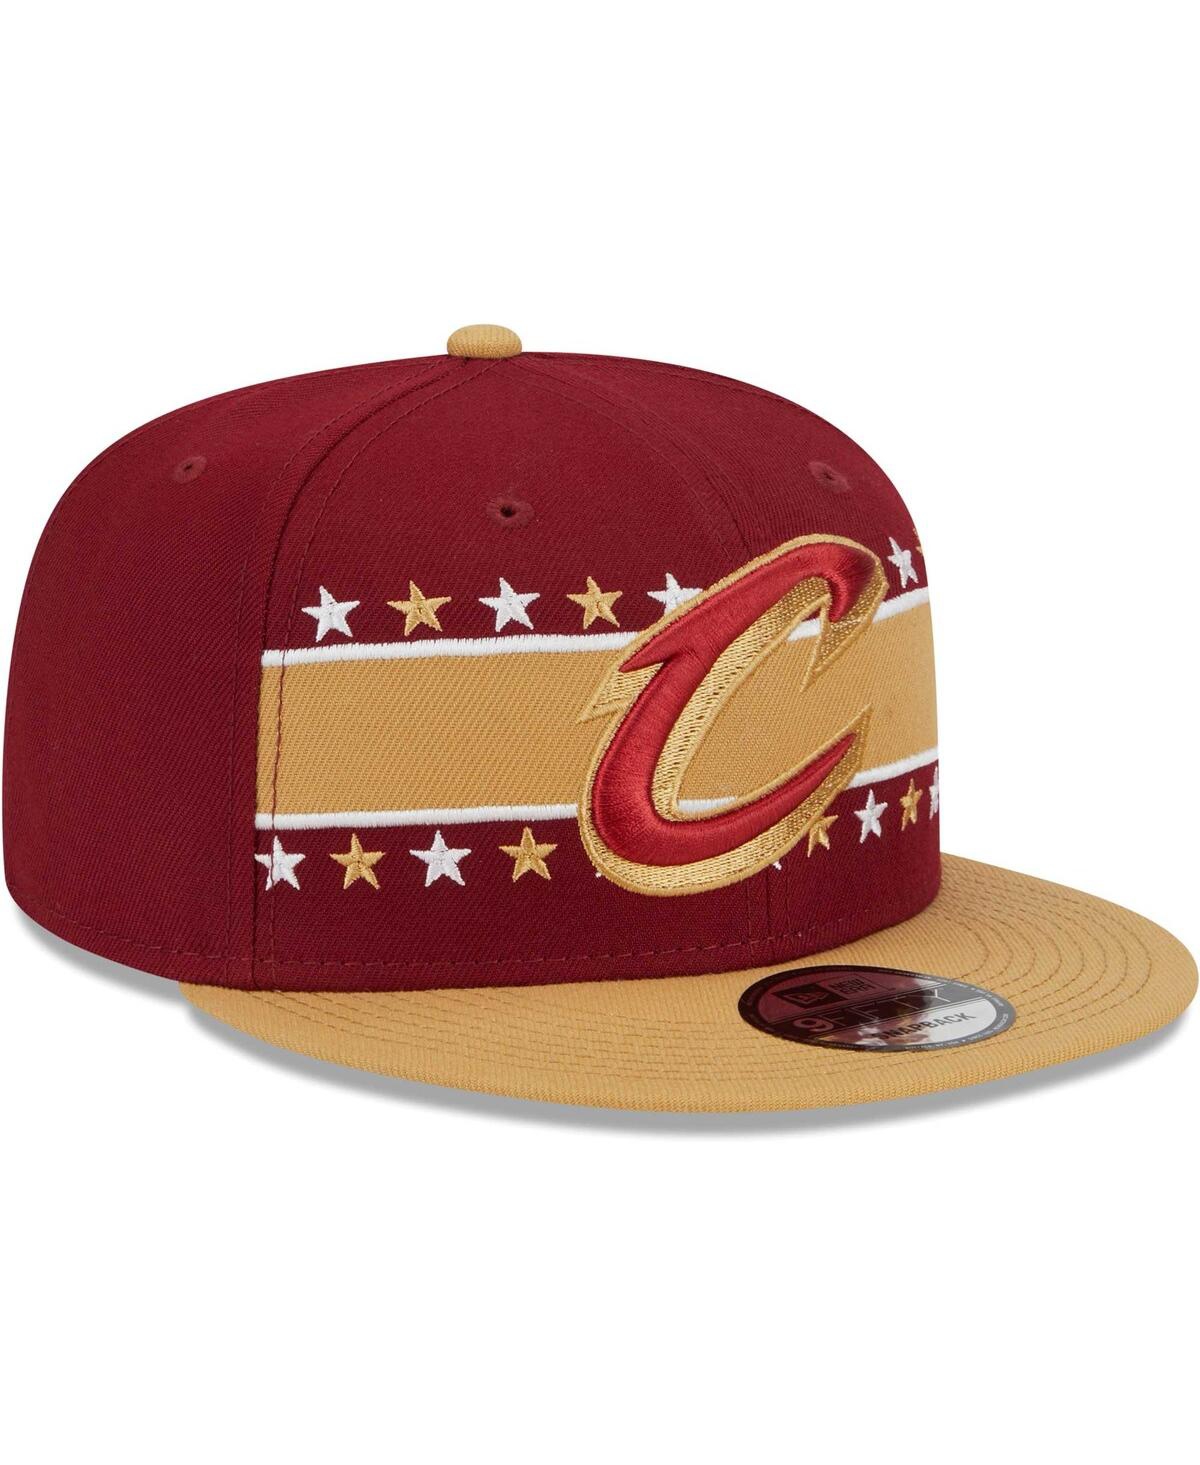  New Era Cleveland Cavaliers 2Tone 9Fifty Snapback Hat